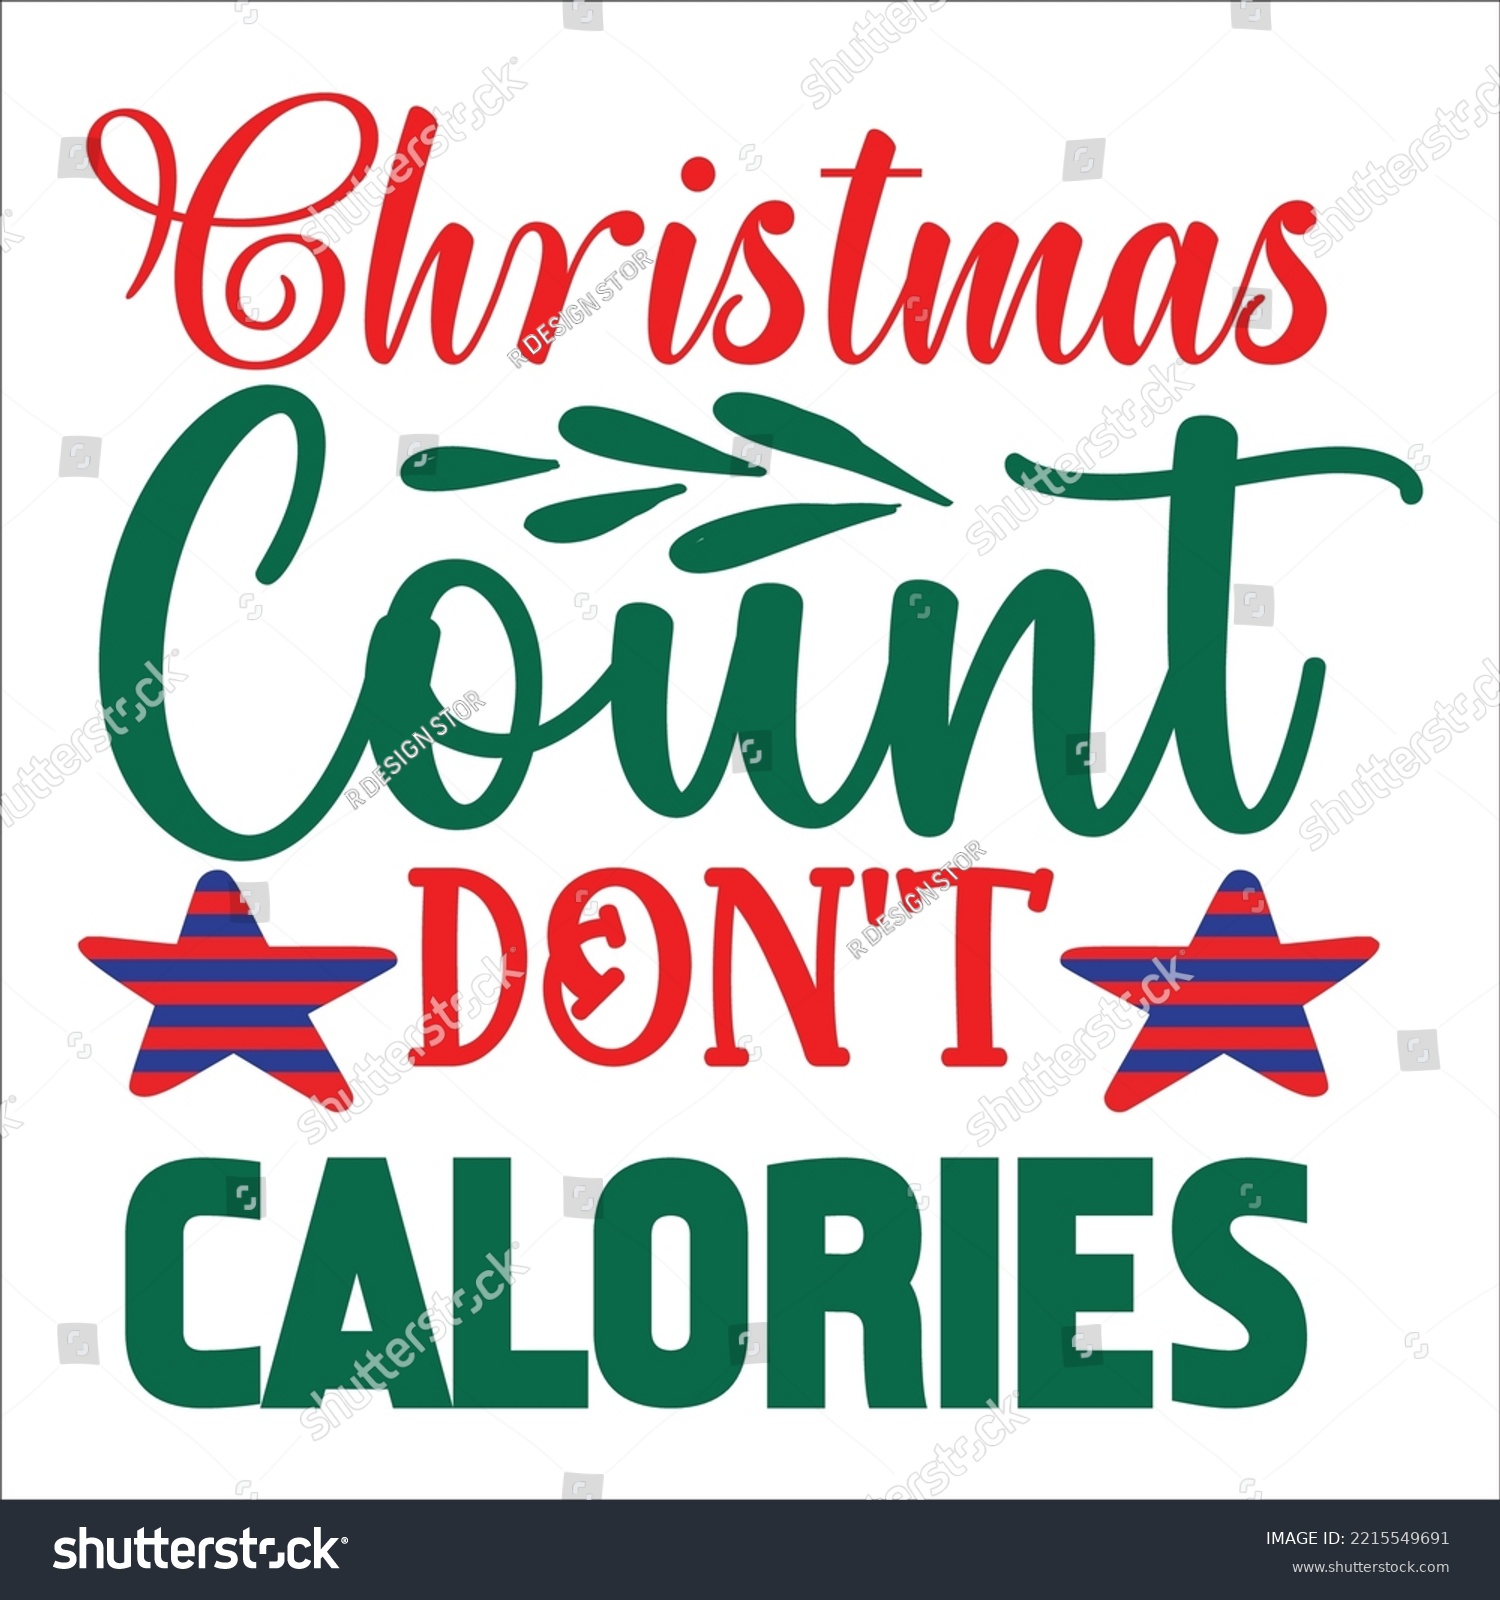 SVG of Christmas Calories Don't Count svg cut file svg